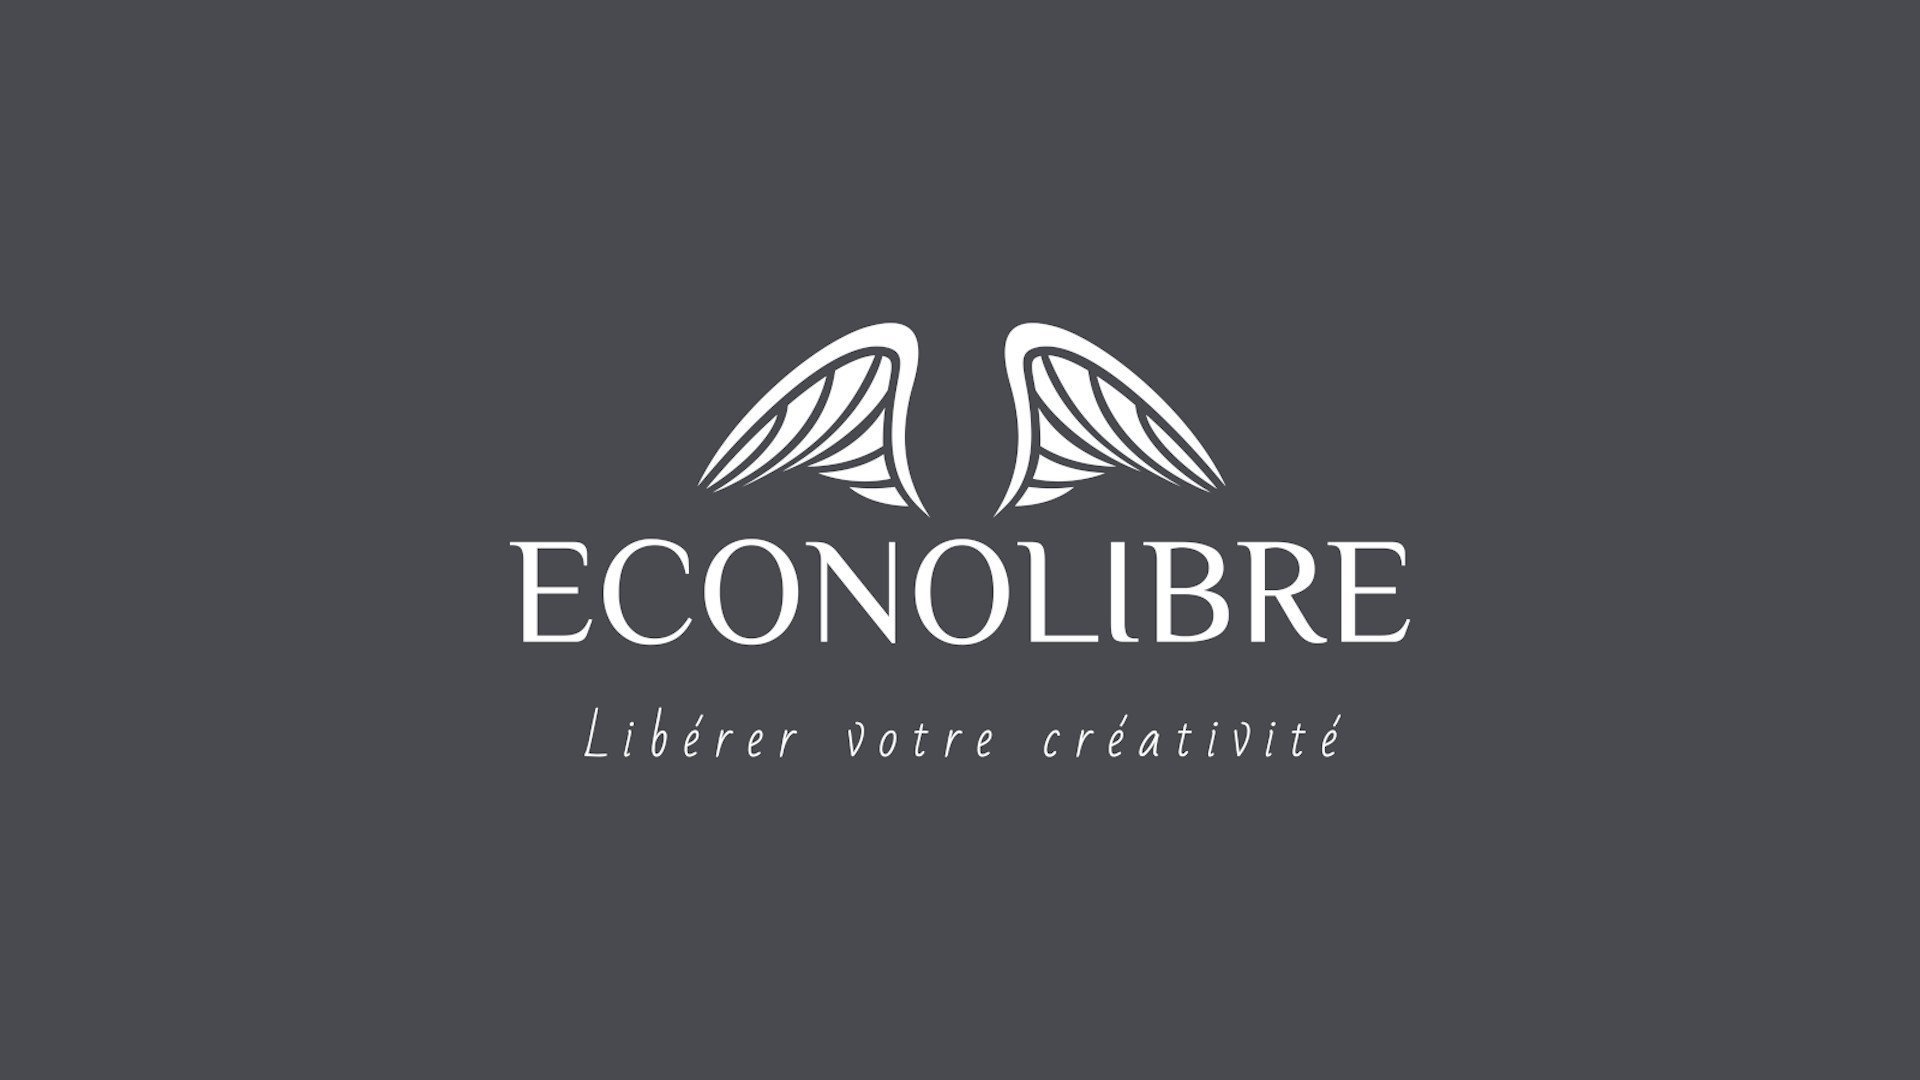 ECONOLIBRE_White Logo_on black_1920x1080.jpg
